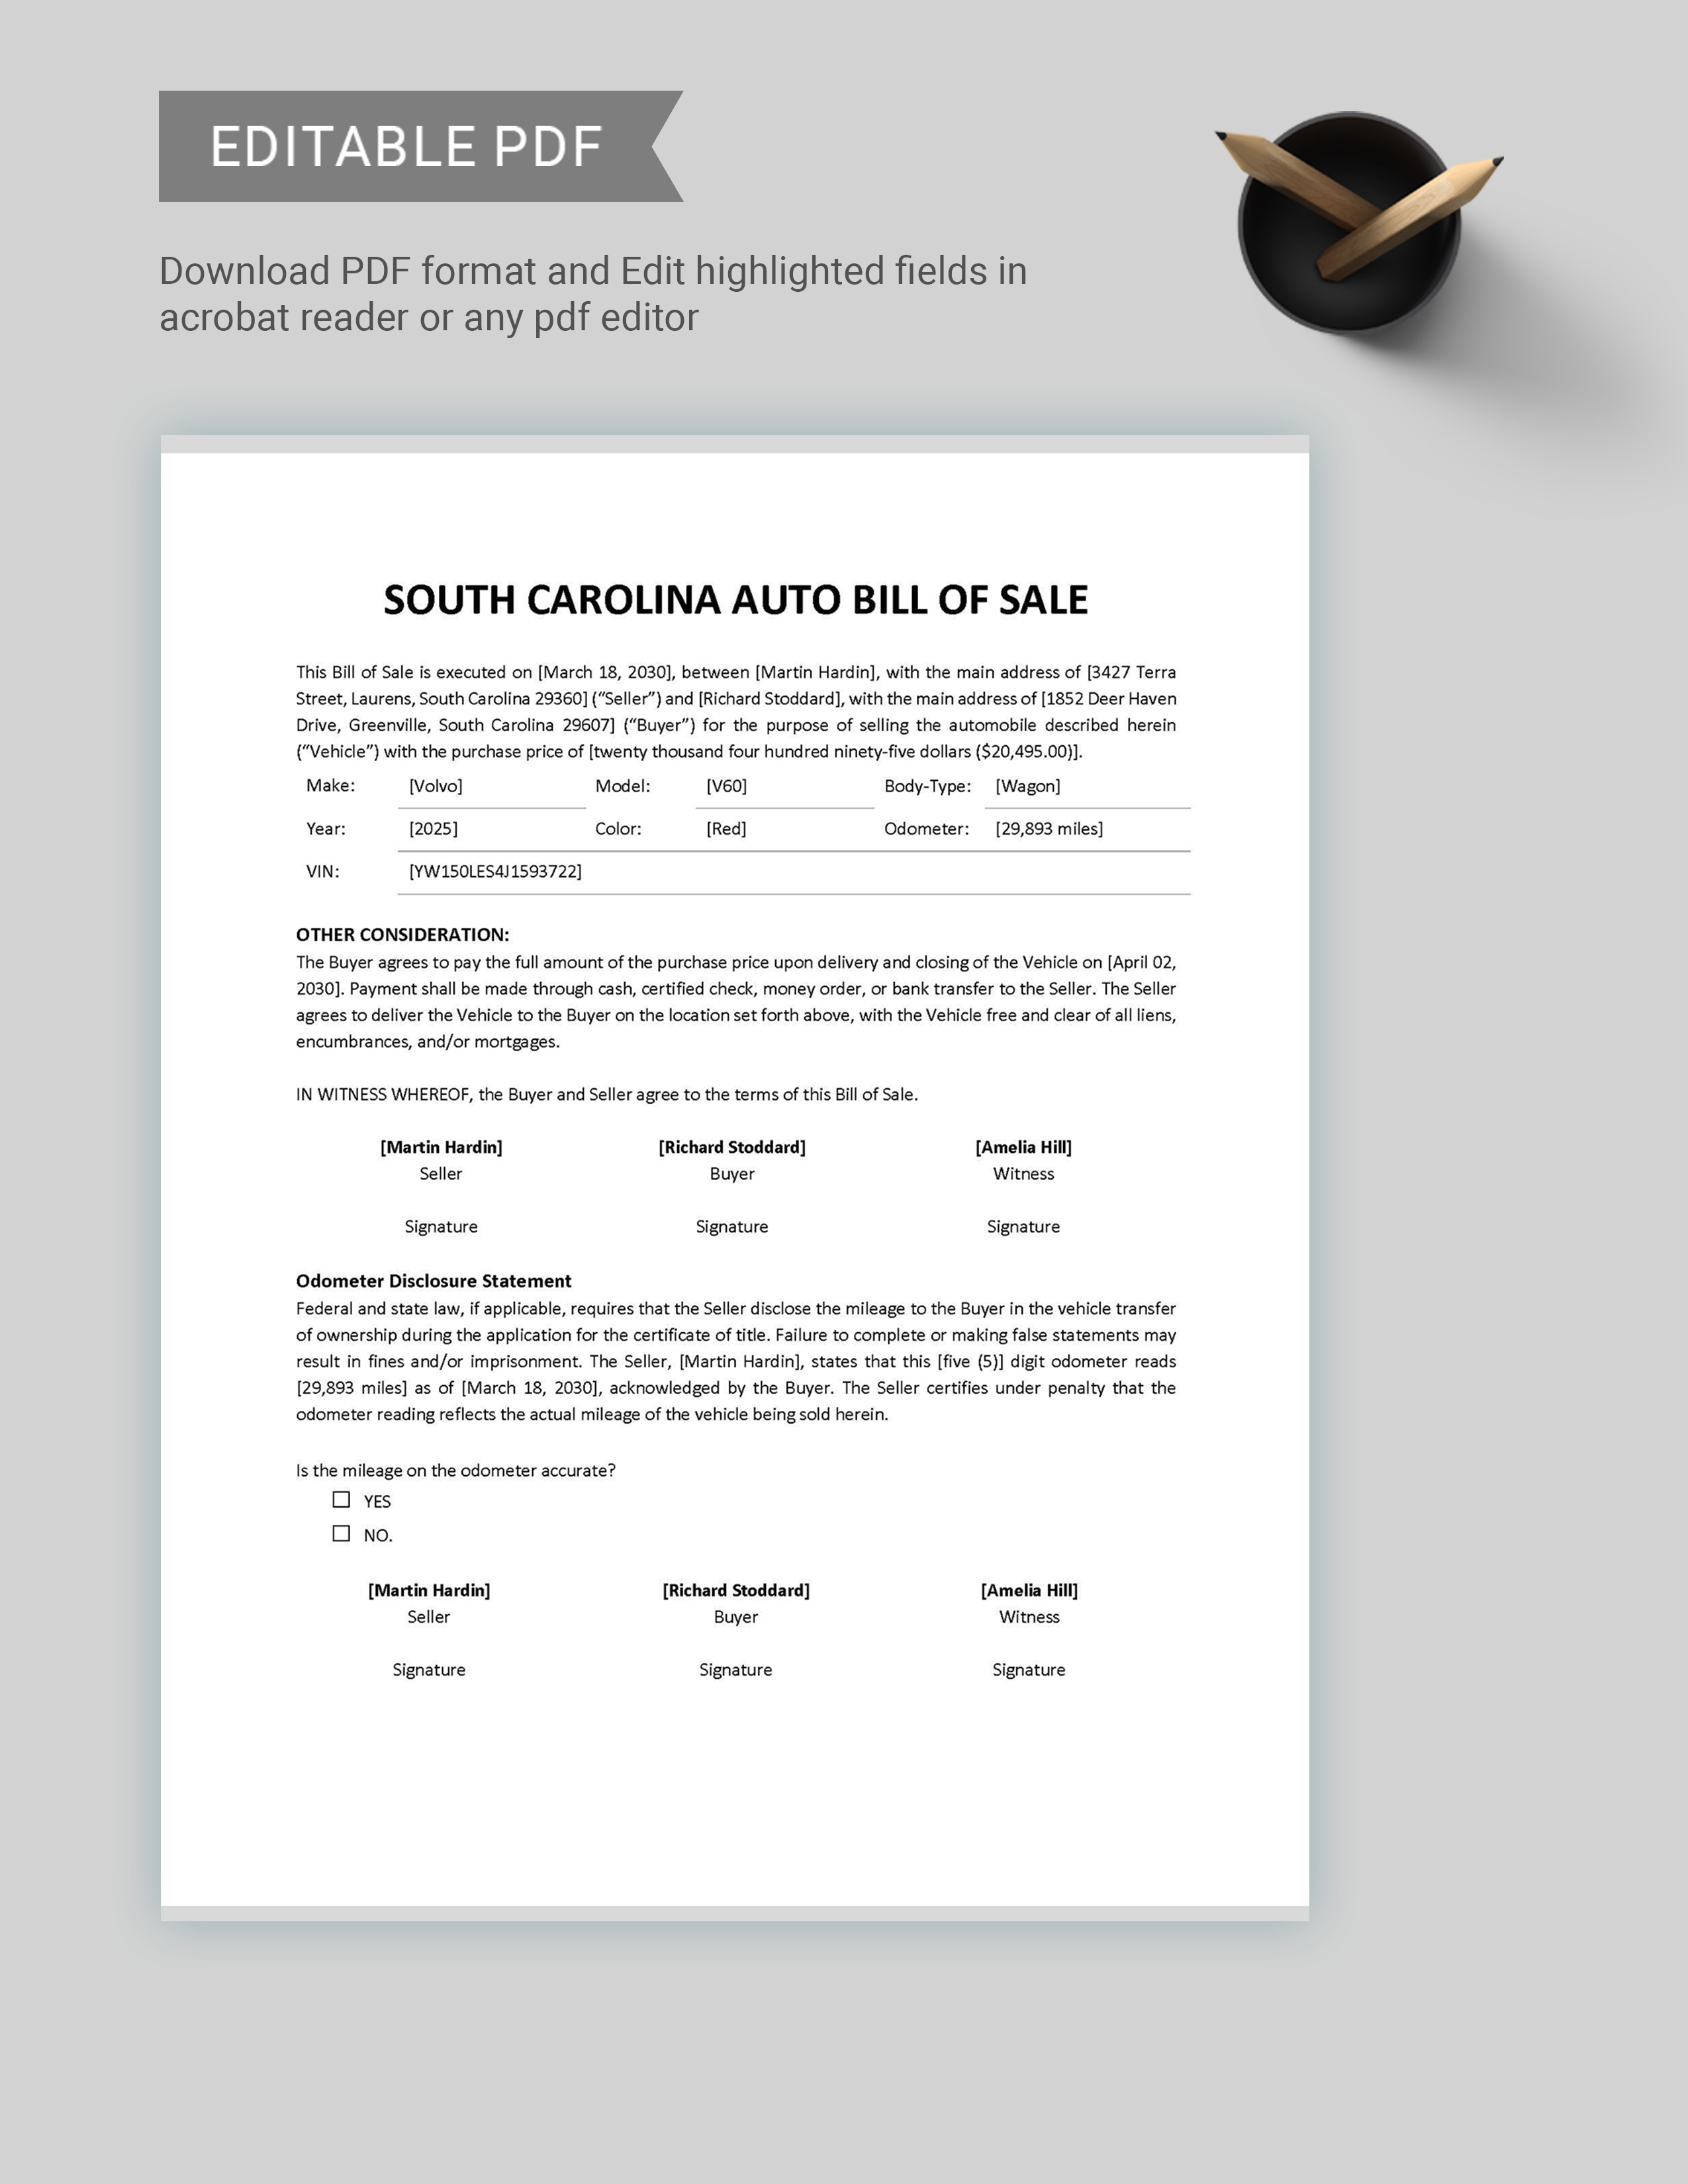 South Carolina Auto Bill of Sale Template